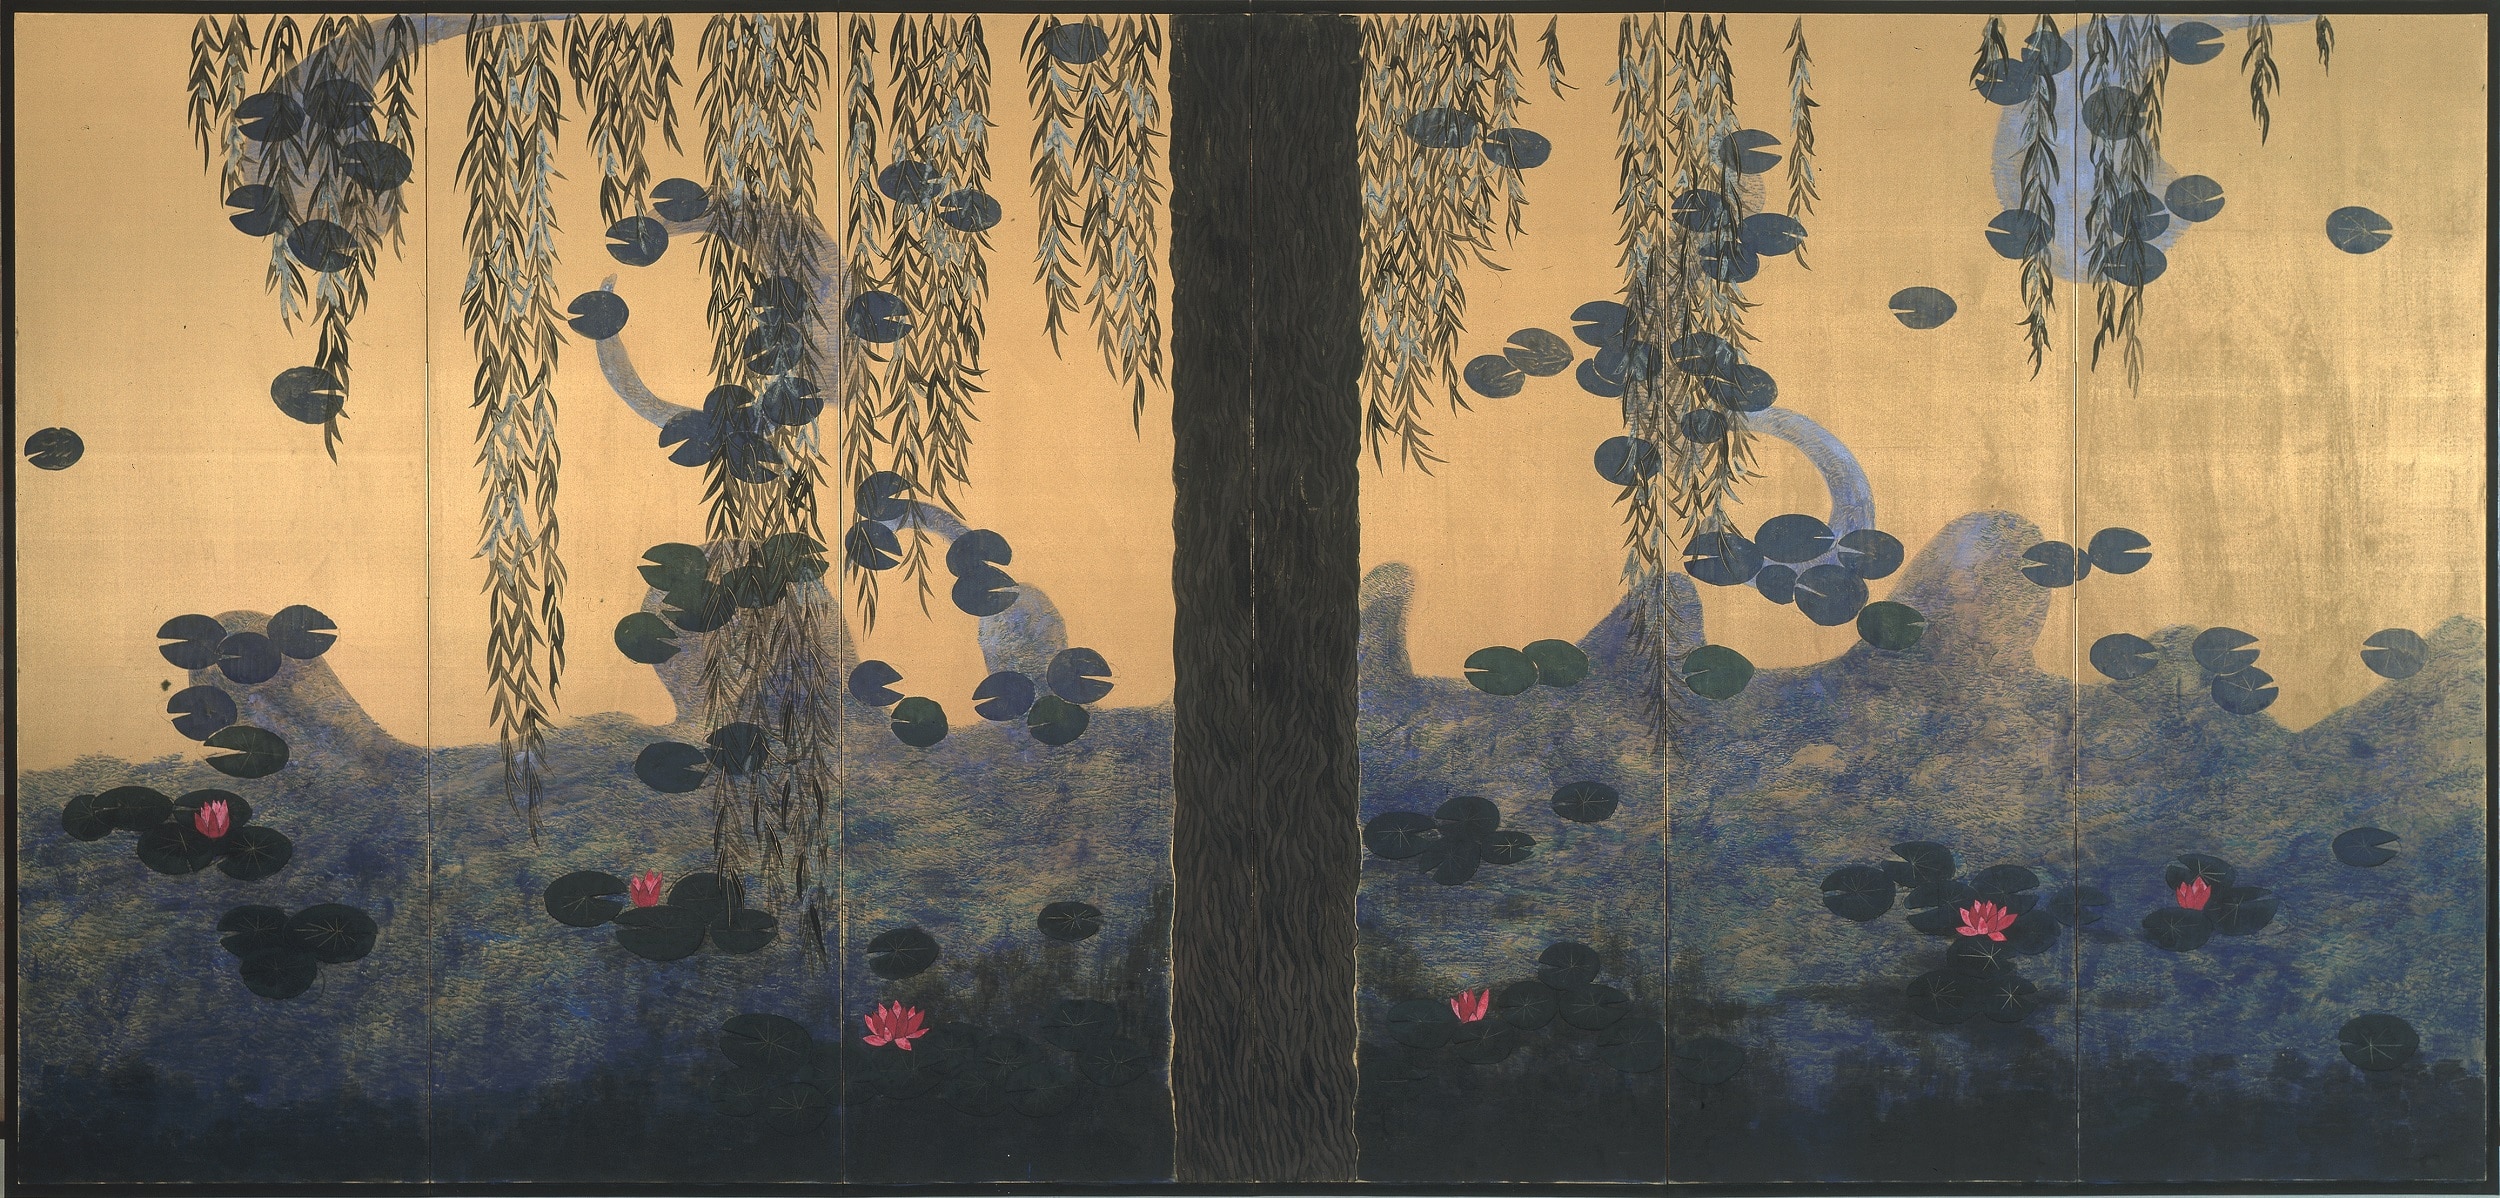 Hiromatsu Reiji, "Homage to Monet" detail, 1998 via Musee Giverny